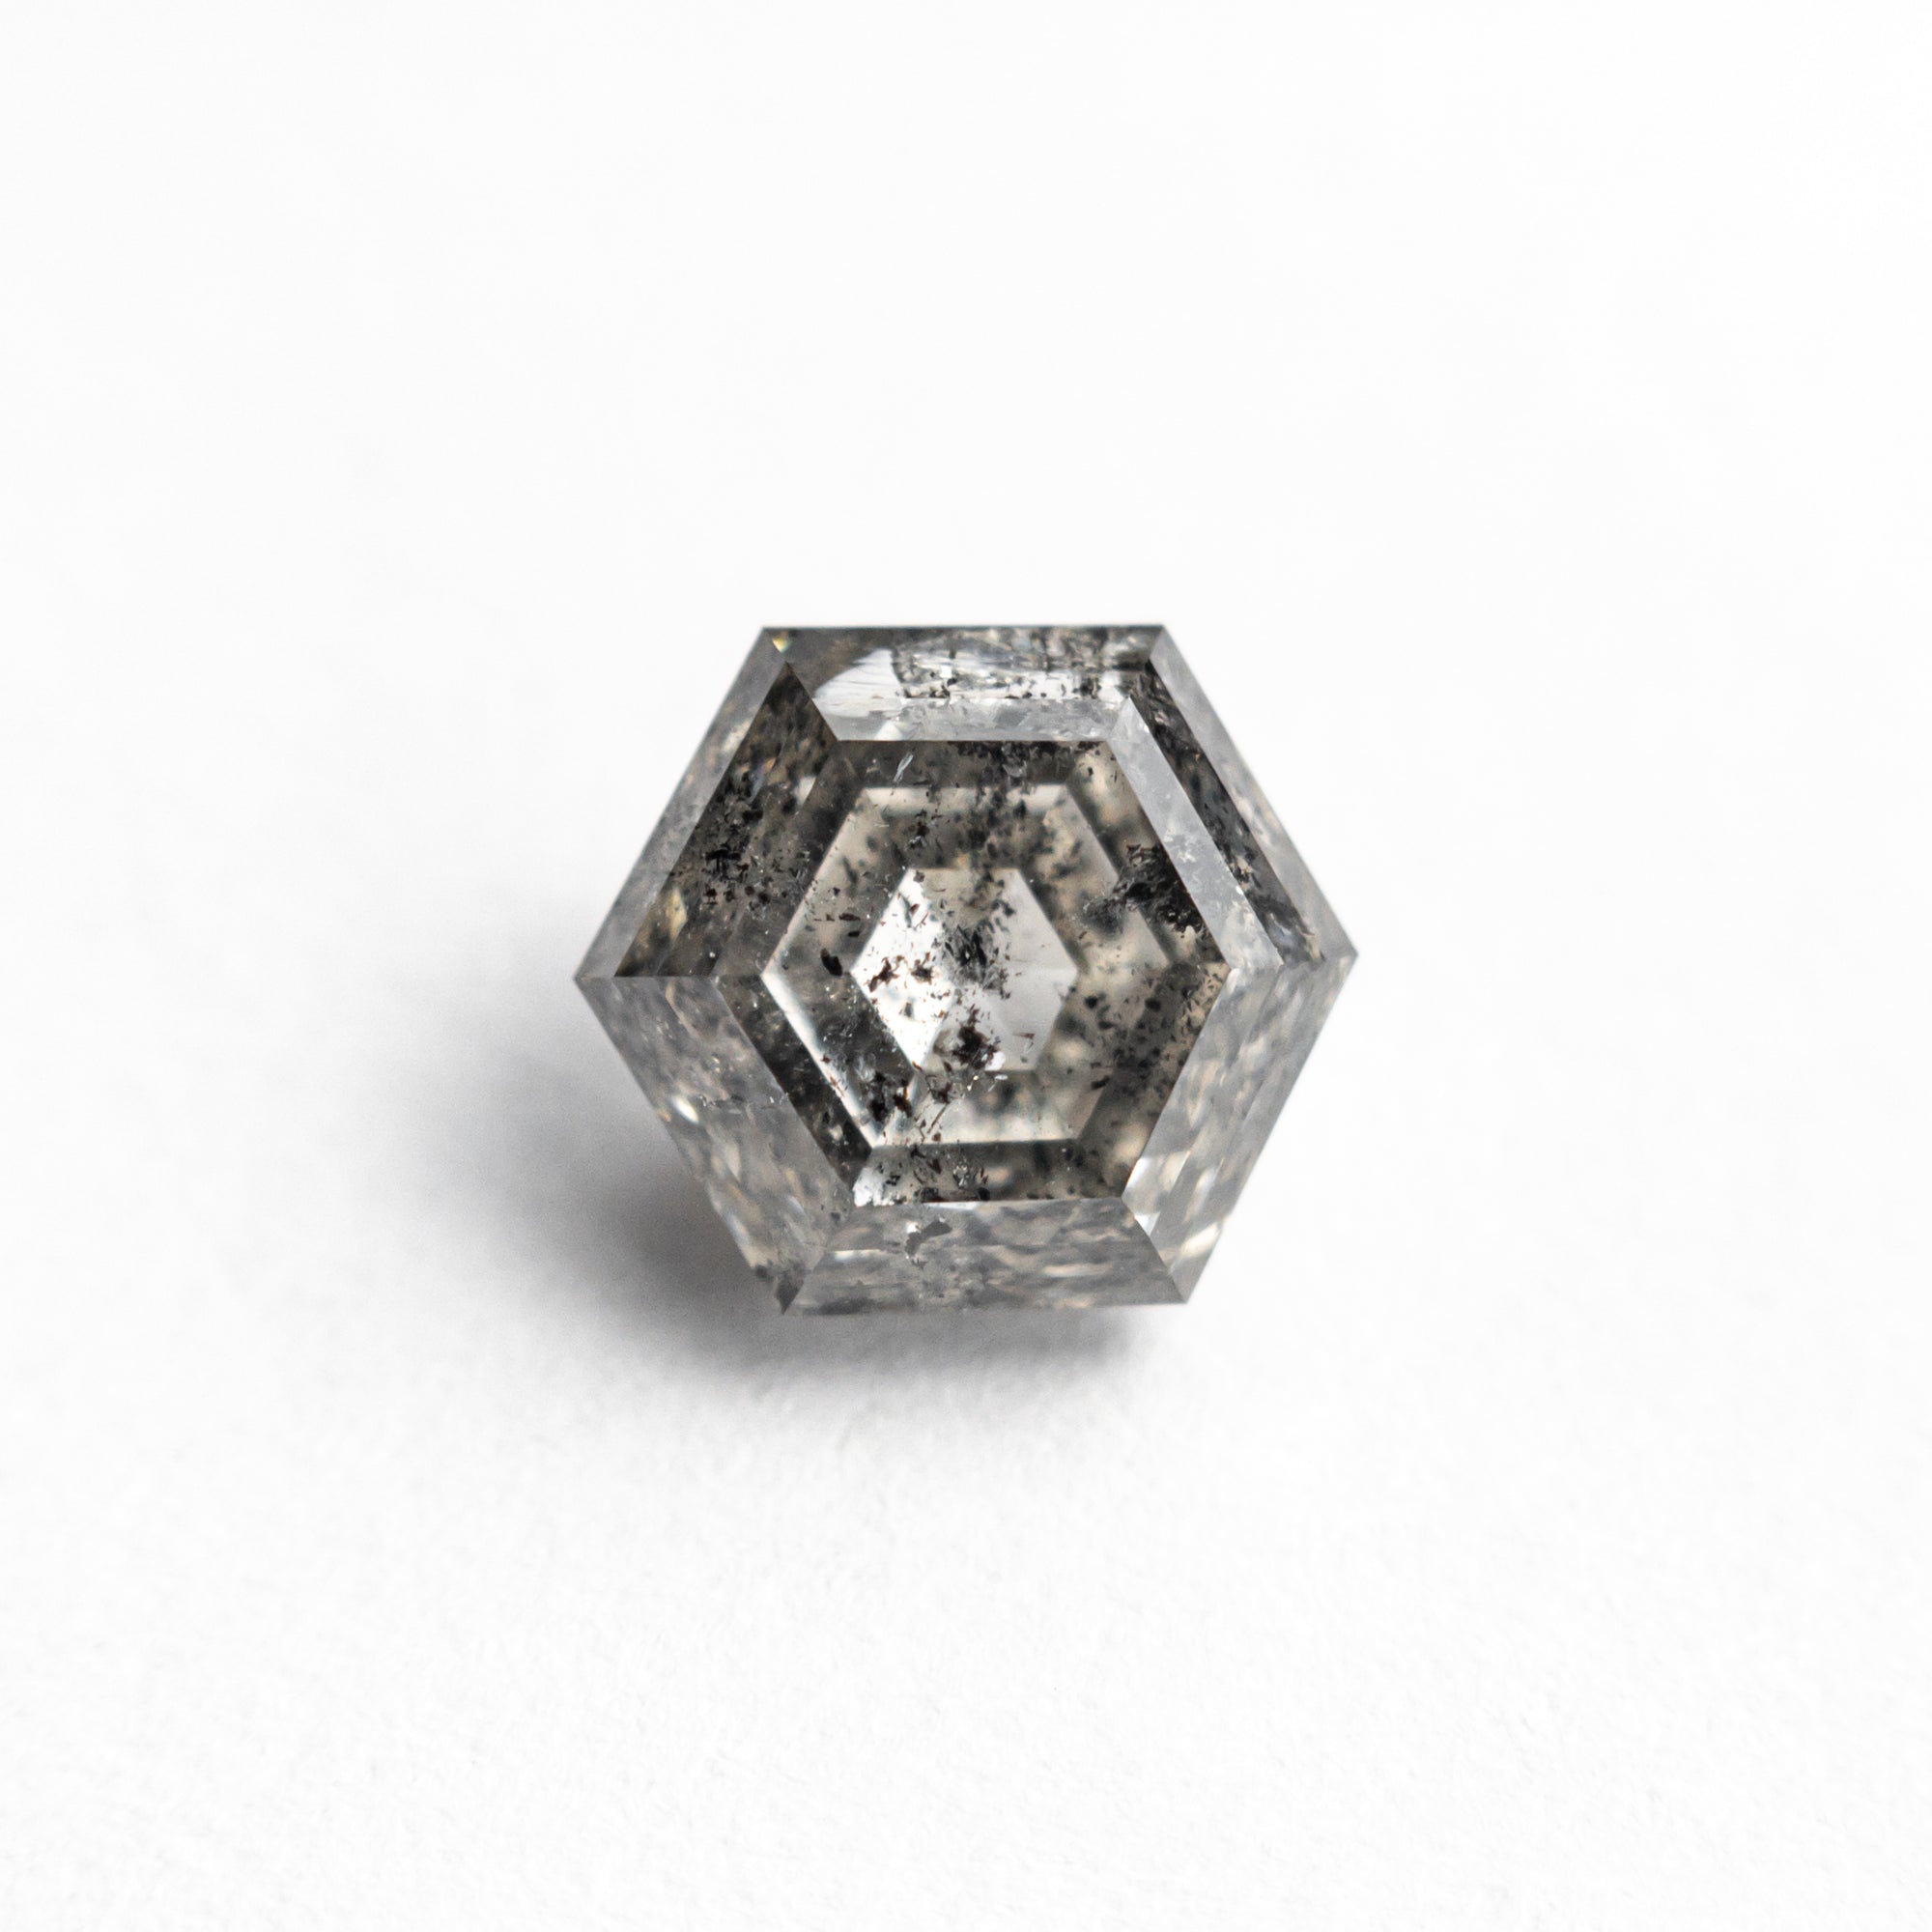 3.42ct Rough Diamond 713-55-49